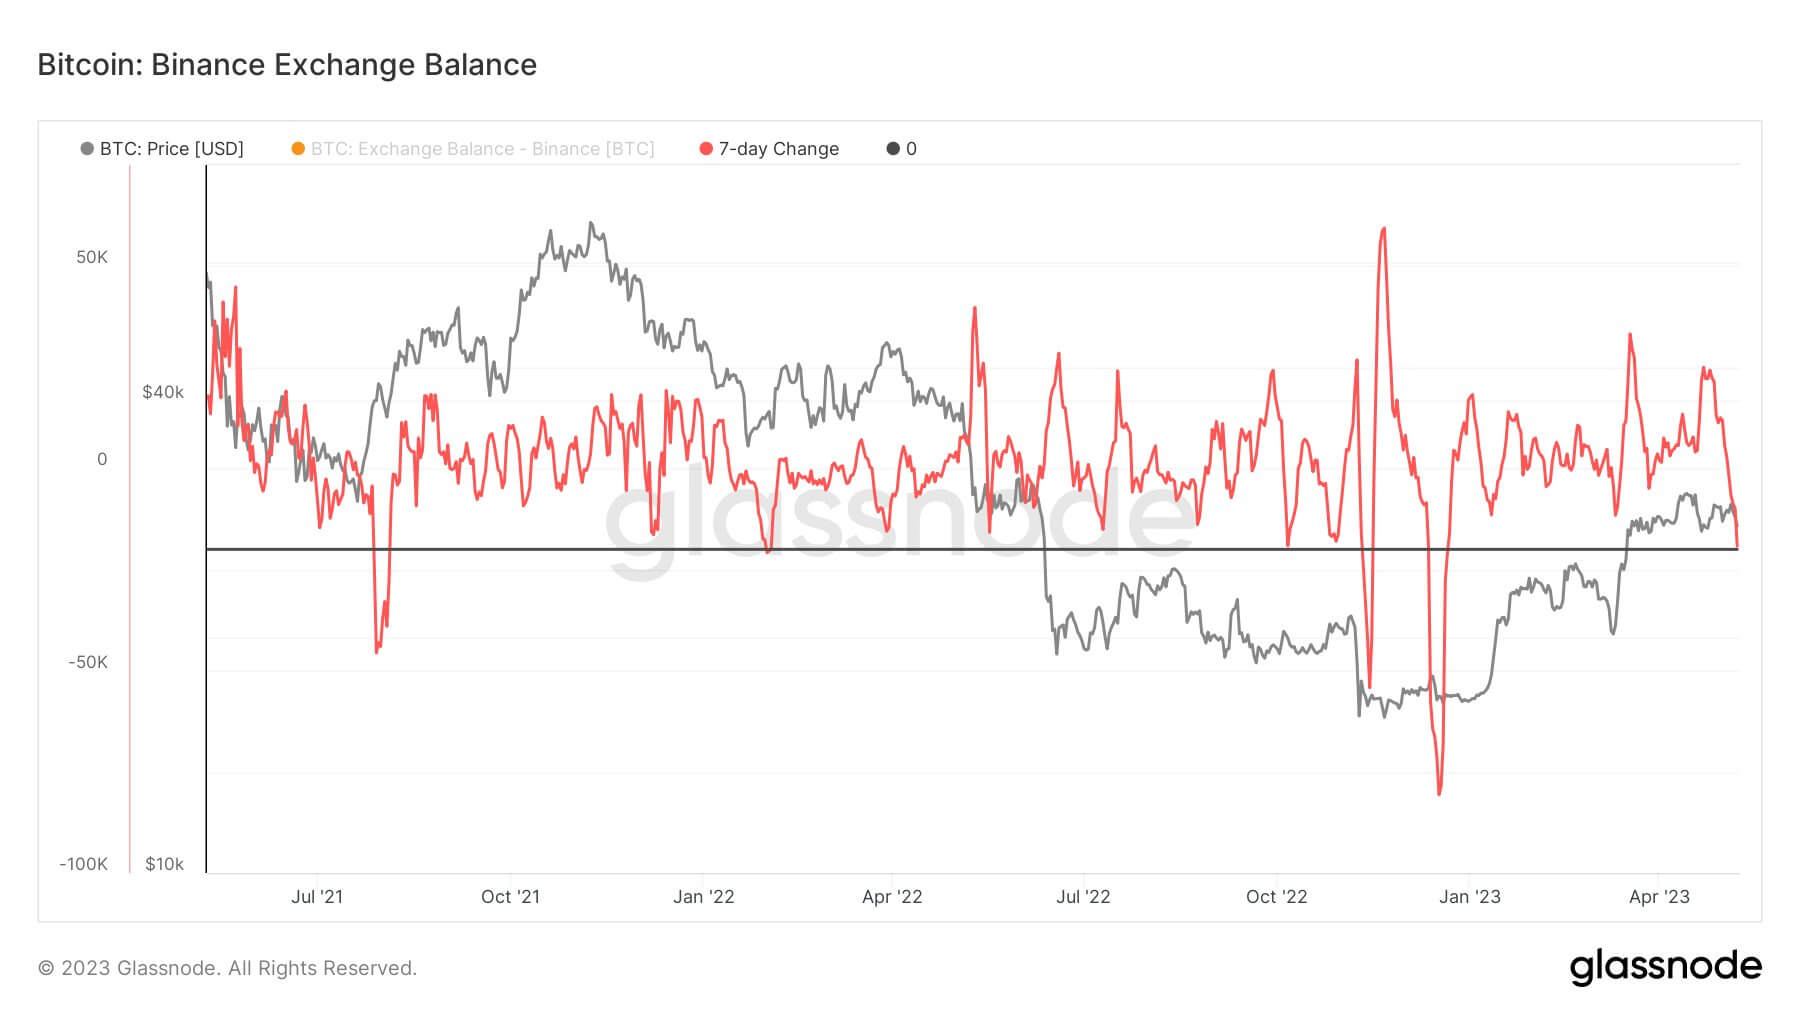 Binance Exchange Balance: (Source: Glassnode)